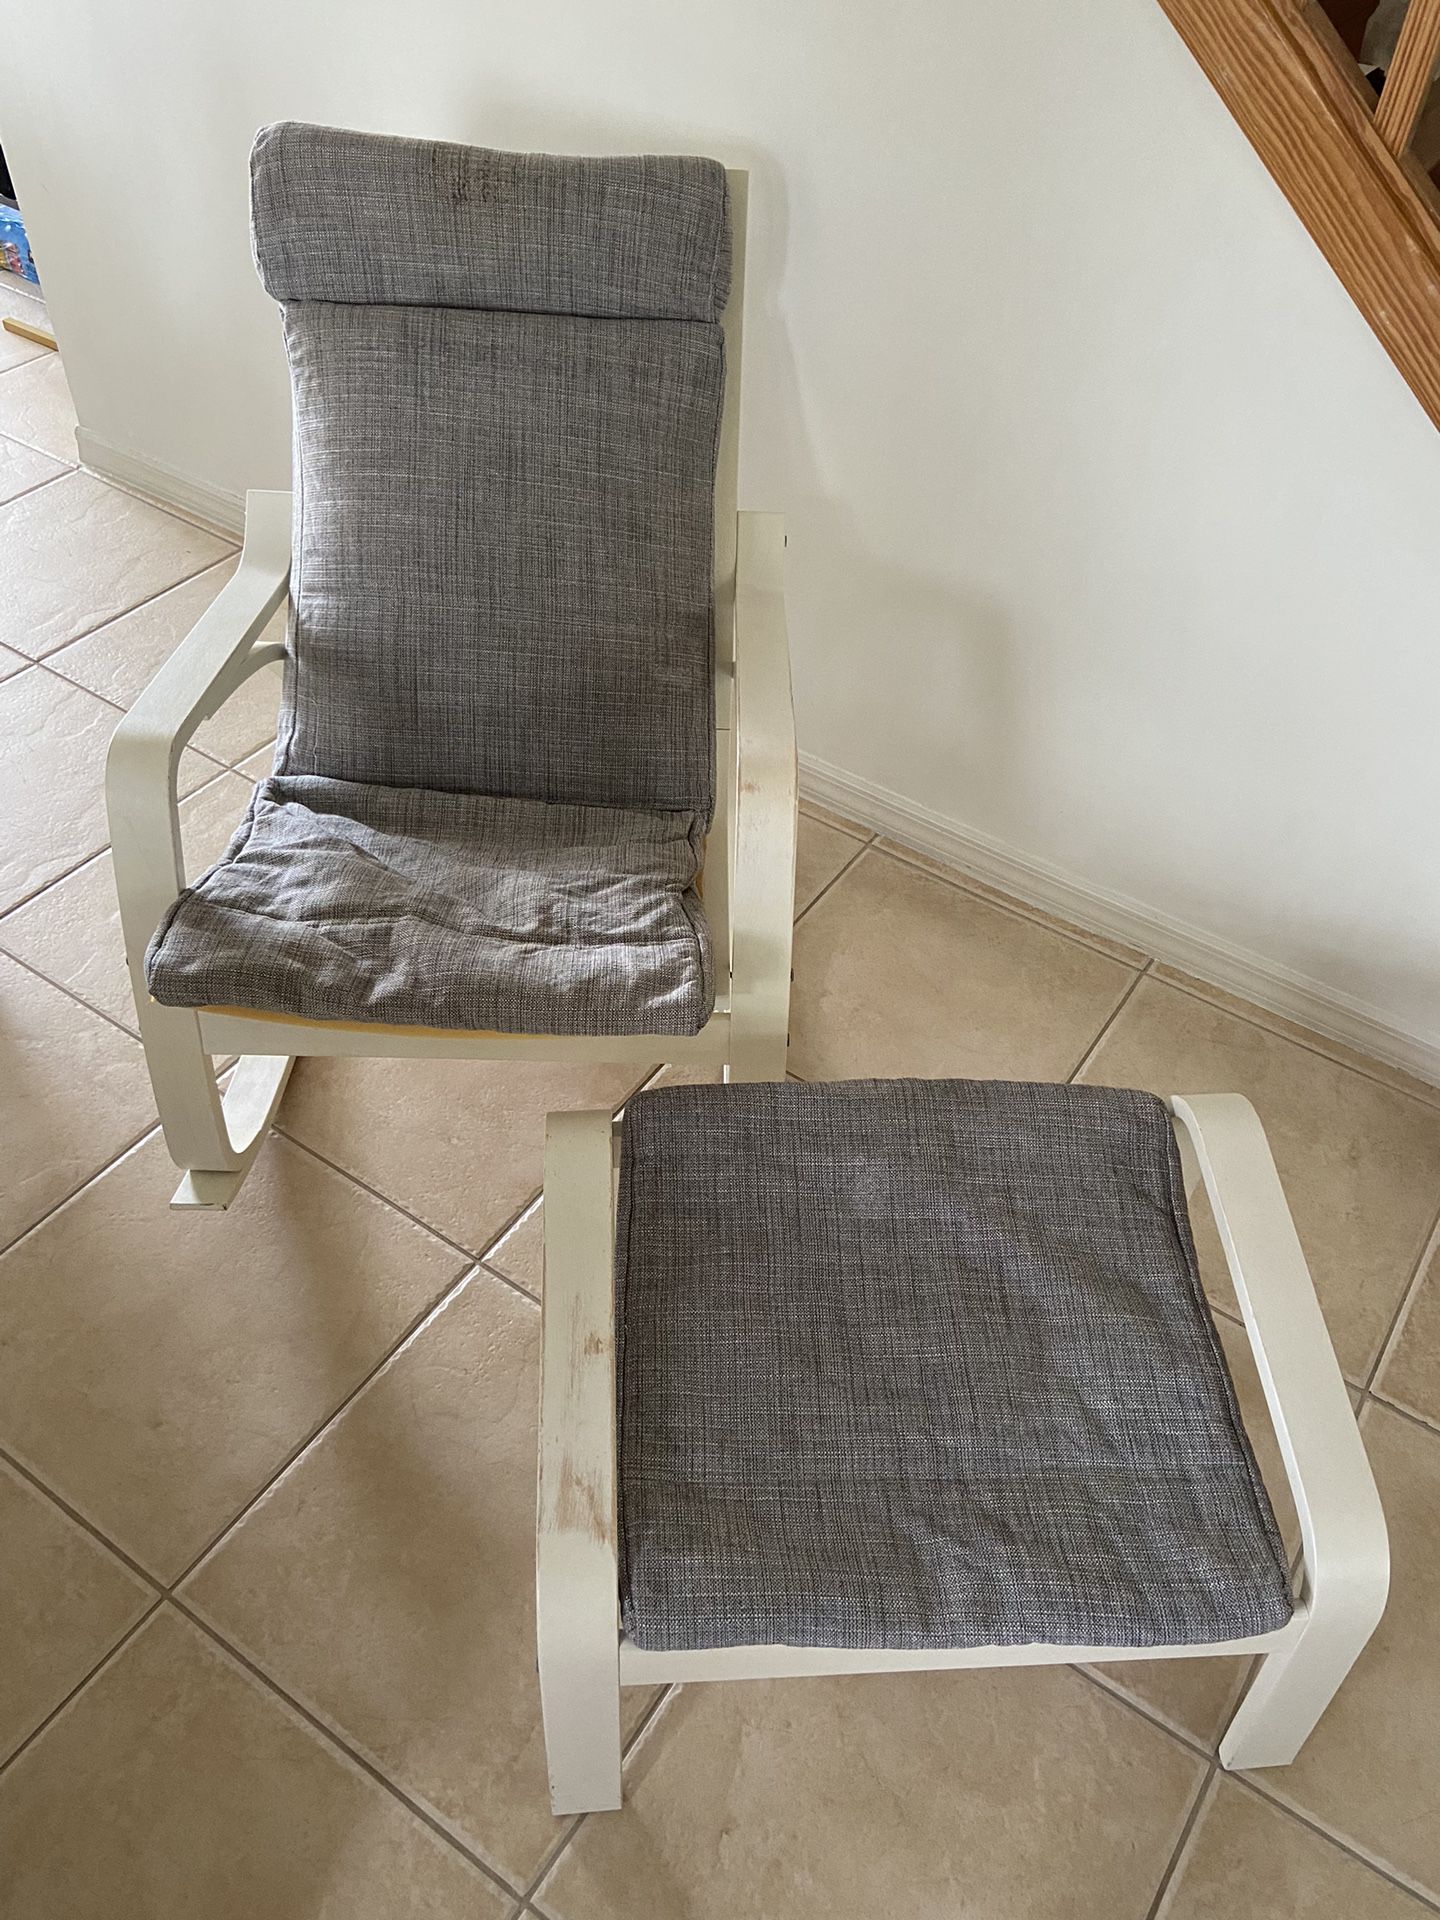 Ikea Poang Chair & Ottoman